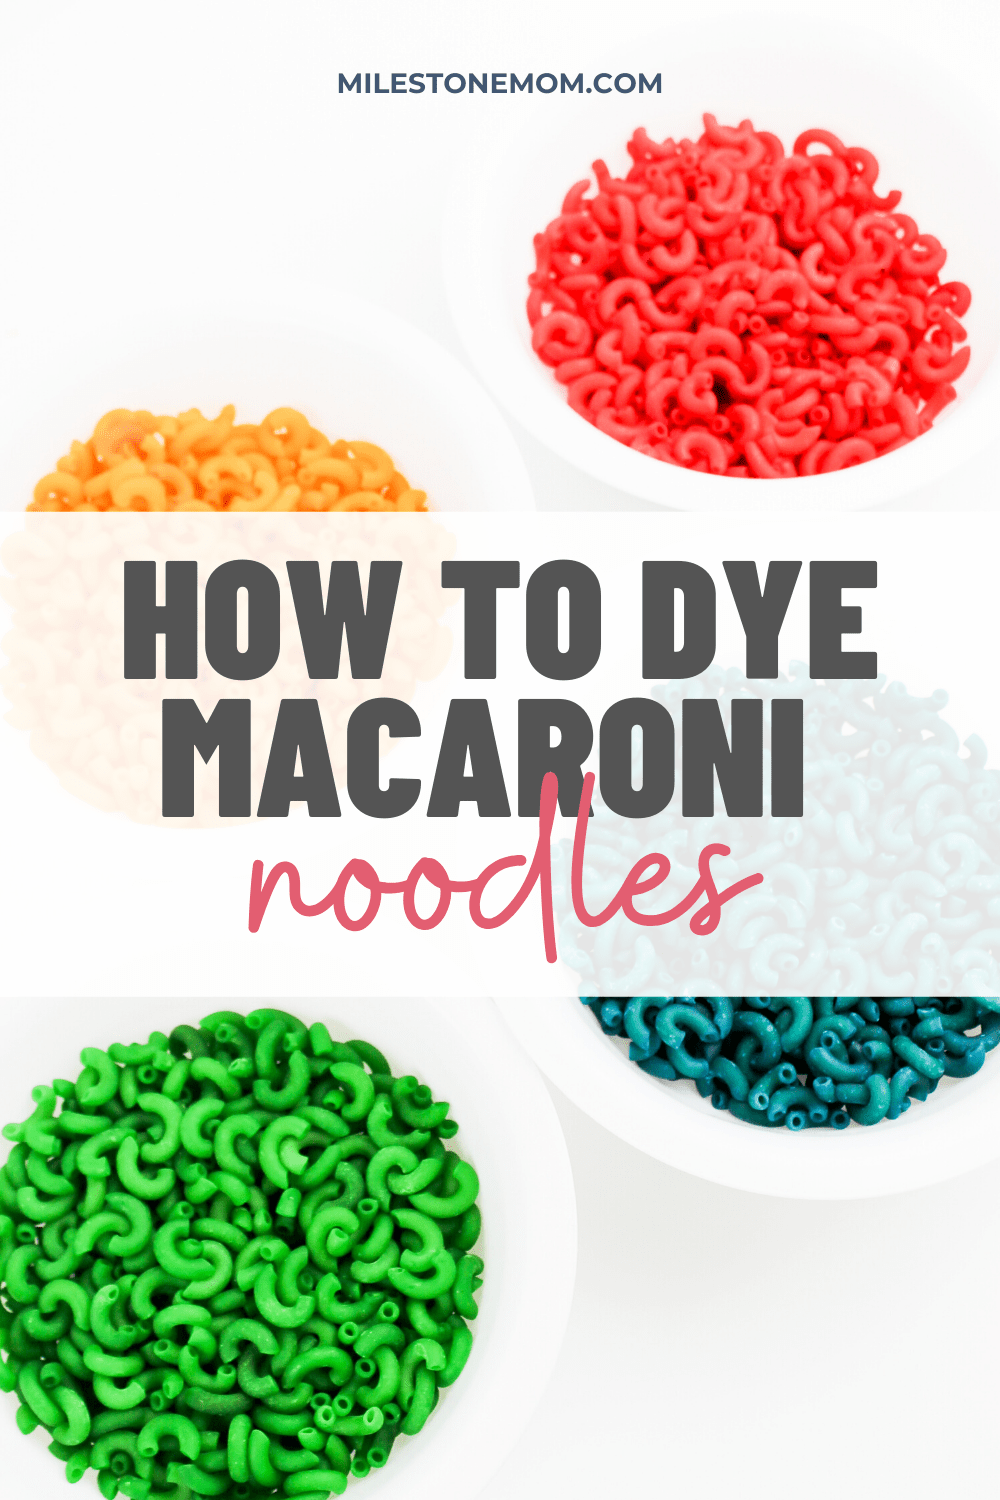 How to Dye Macaroni Noodles